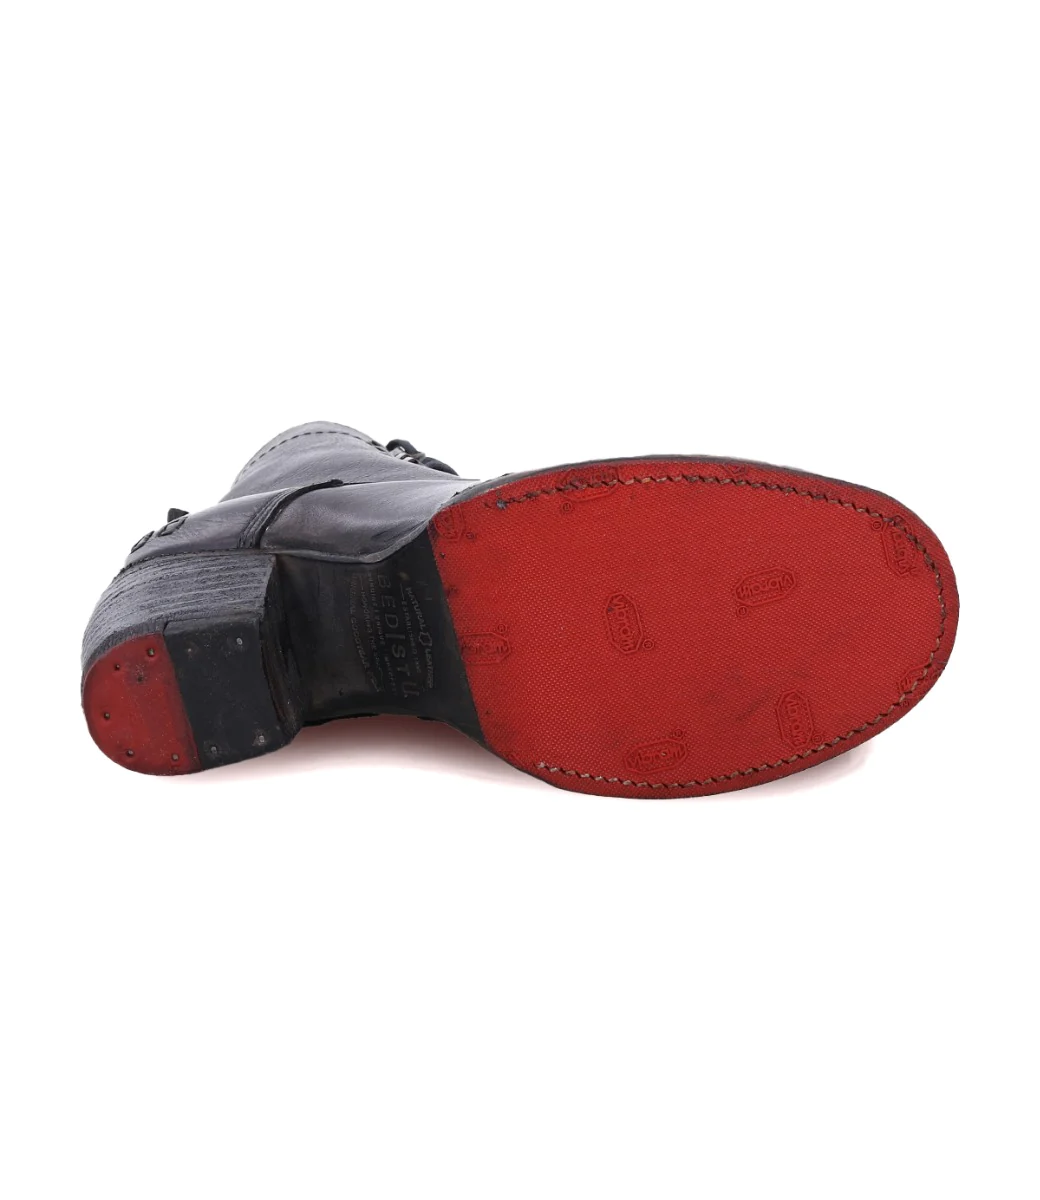 Bed Stu Judgement Boot in Black Rustic - SpiritedBoutiques Boho Hippie Boutique Style Boot, Bed Stu